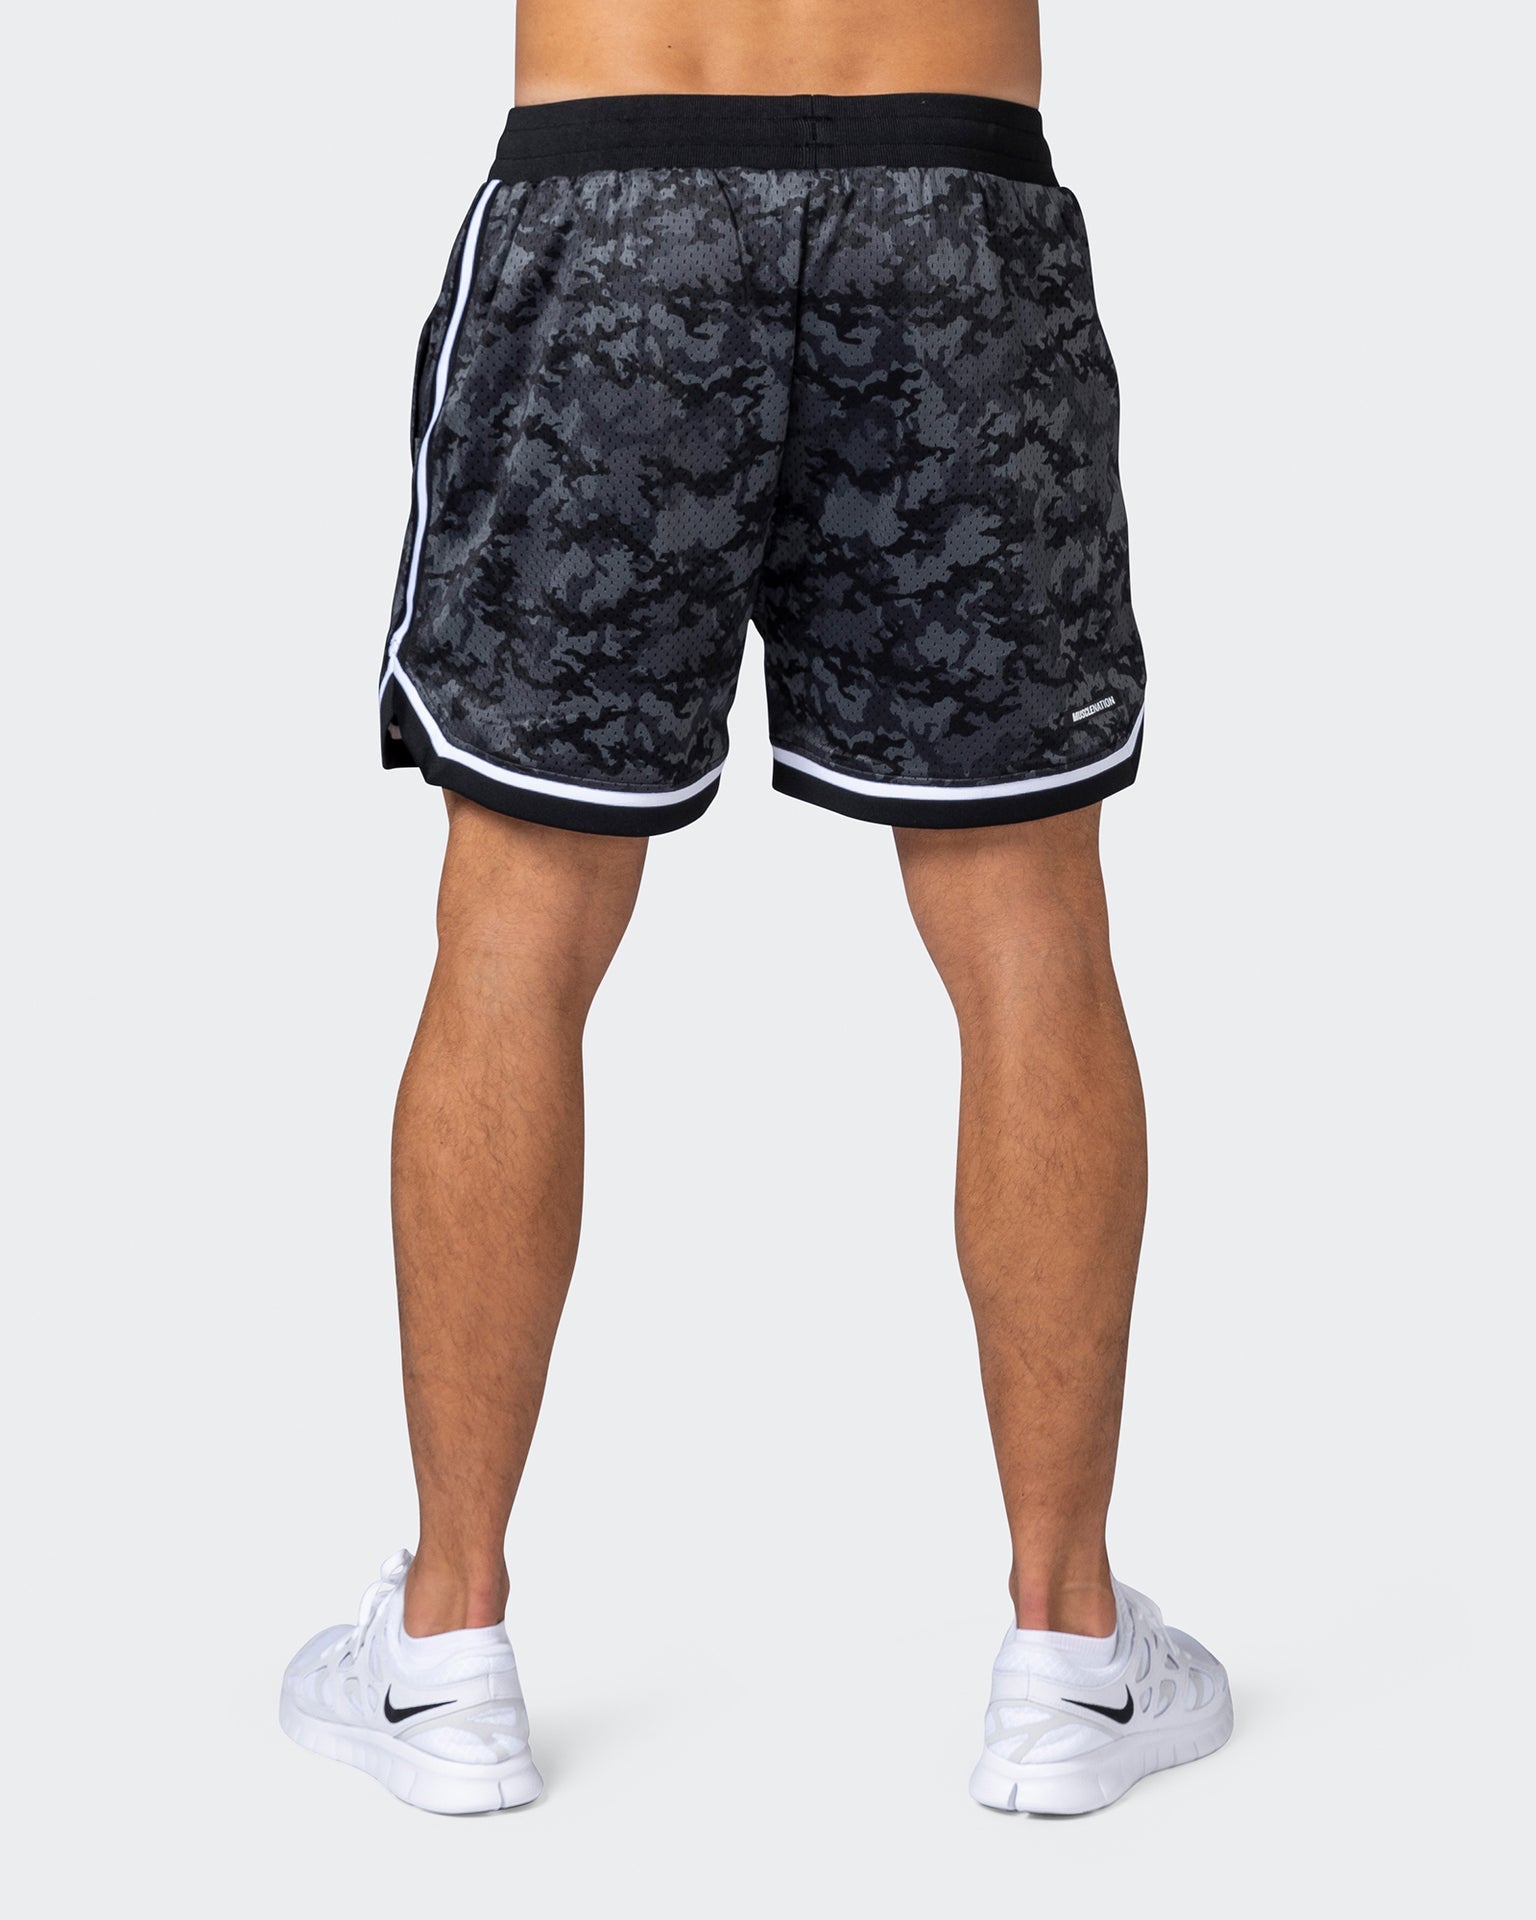 musclenation Shorts Mens 5" Basketball Shorts - Monochrome Camo Print